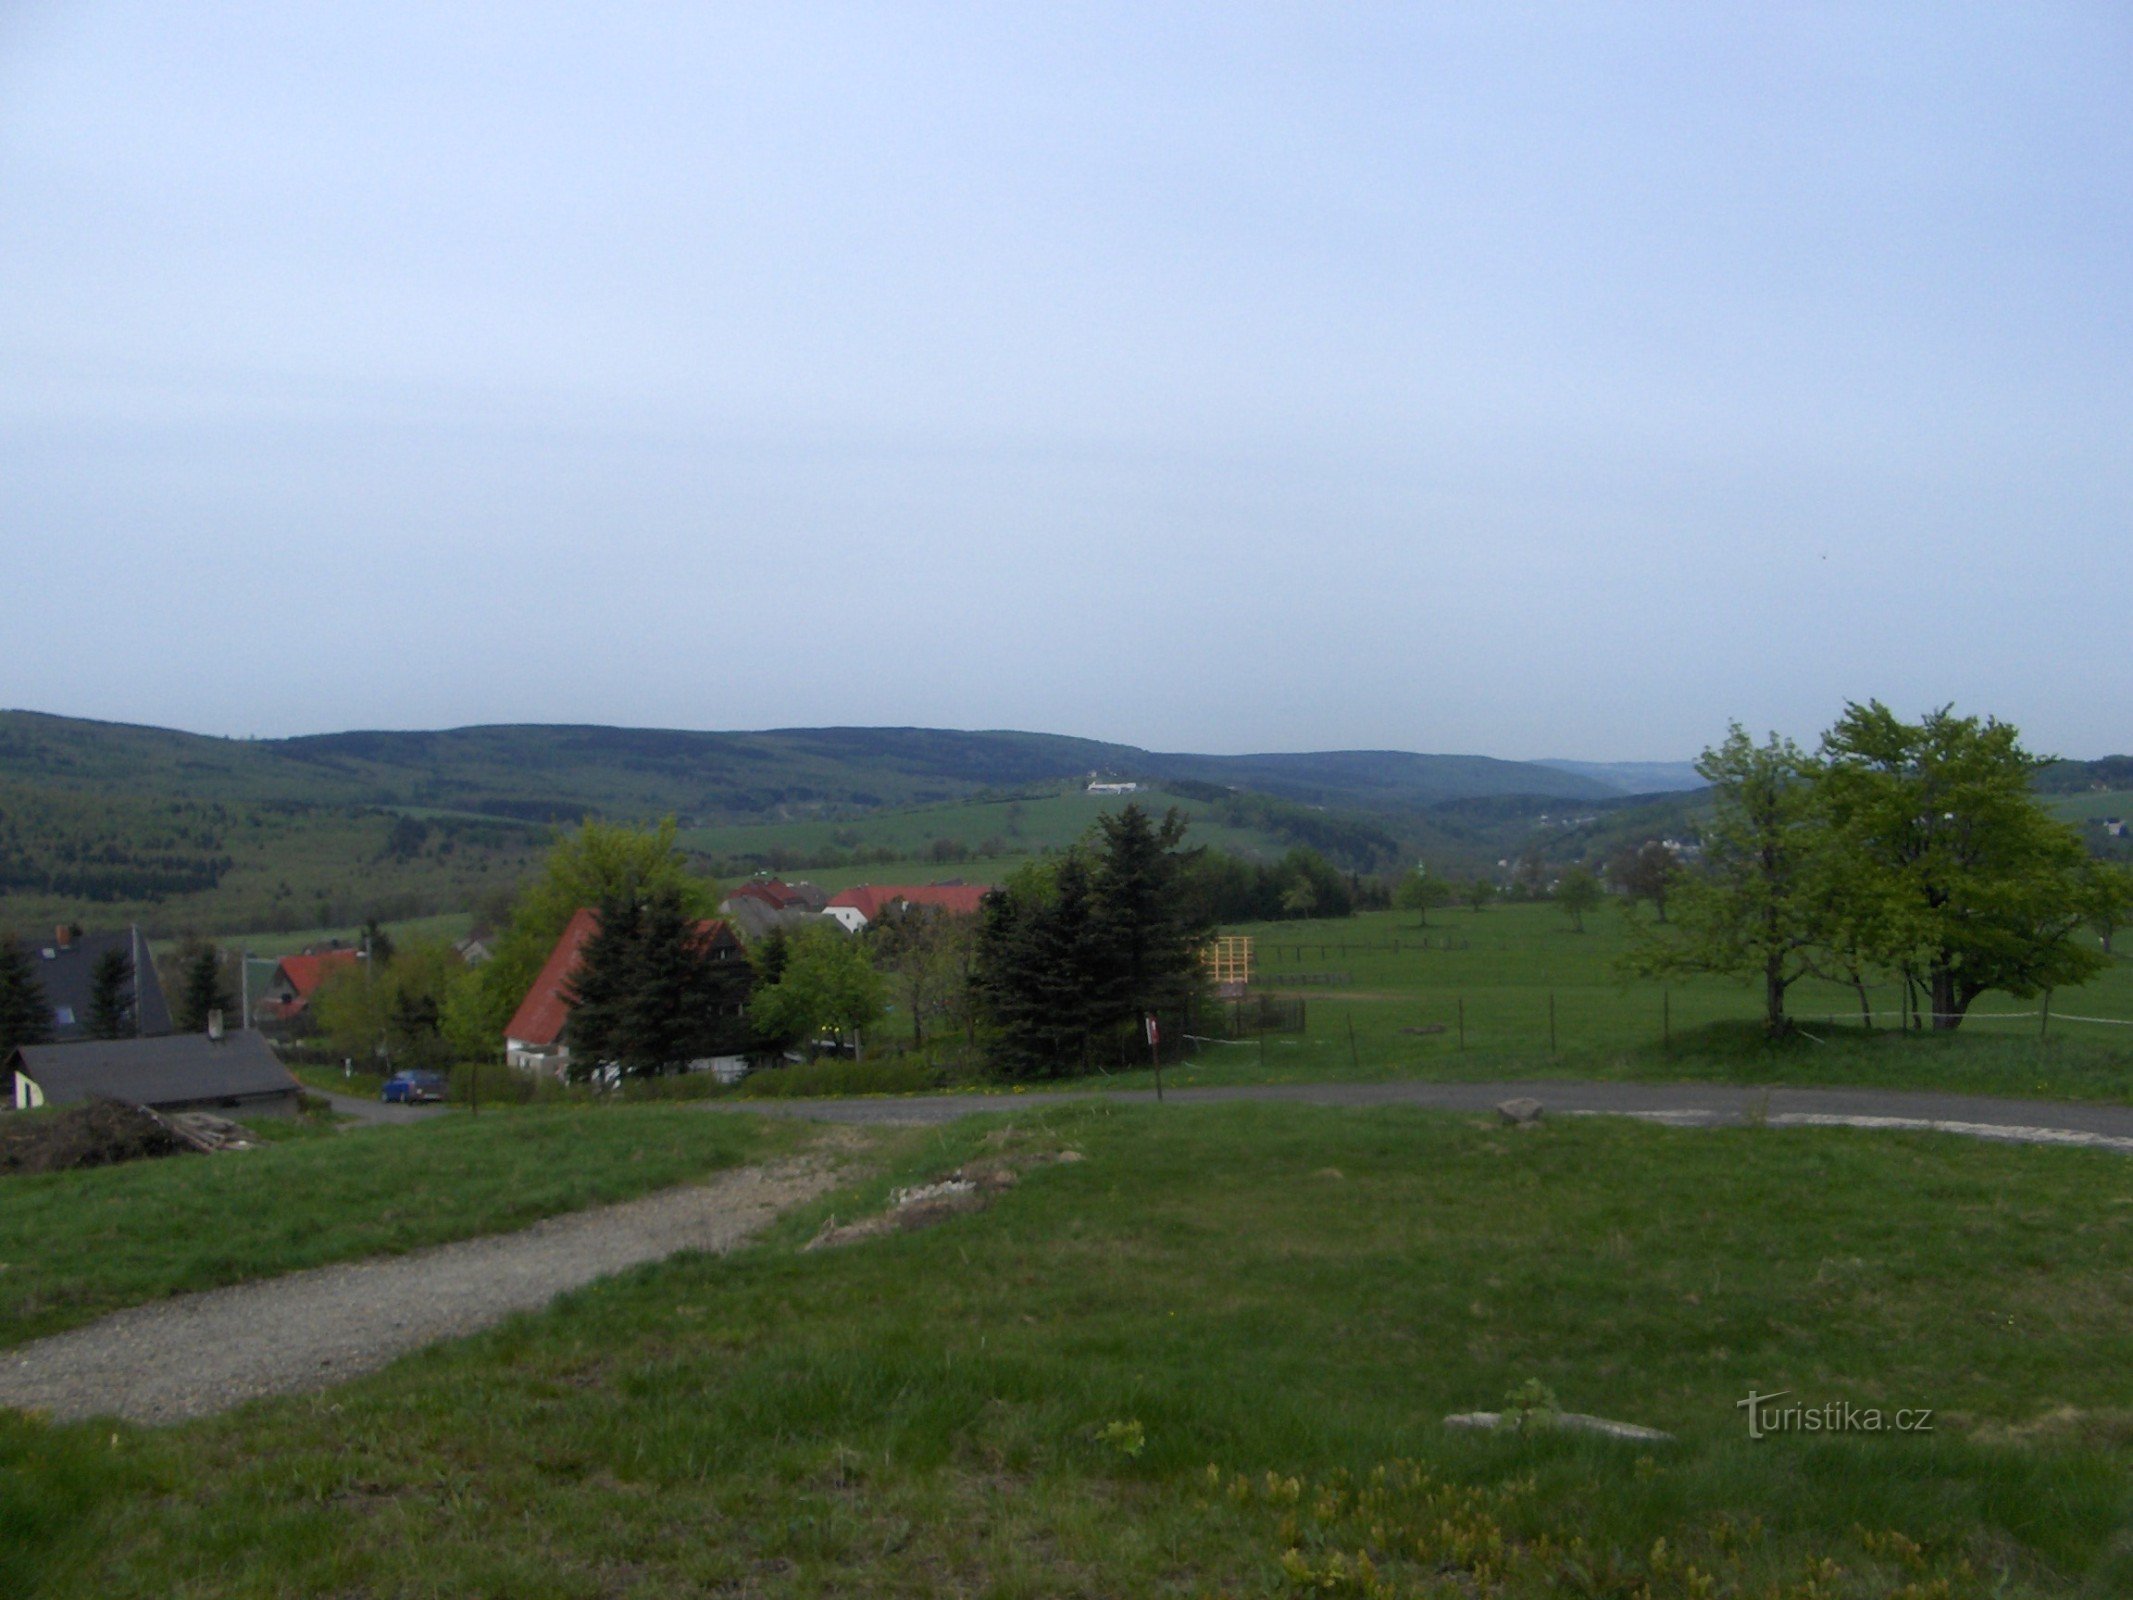 Blick Richtung Mount St. Kateřiny und der Kamenné vrch